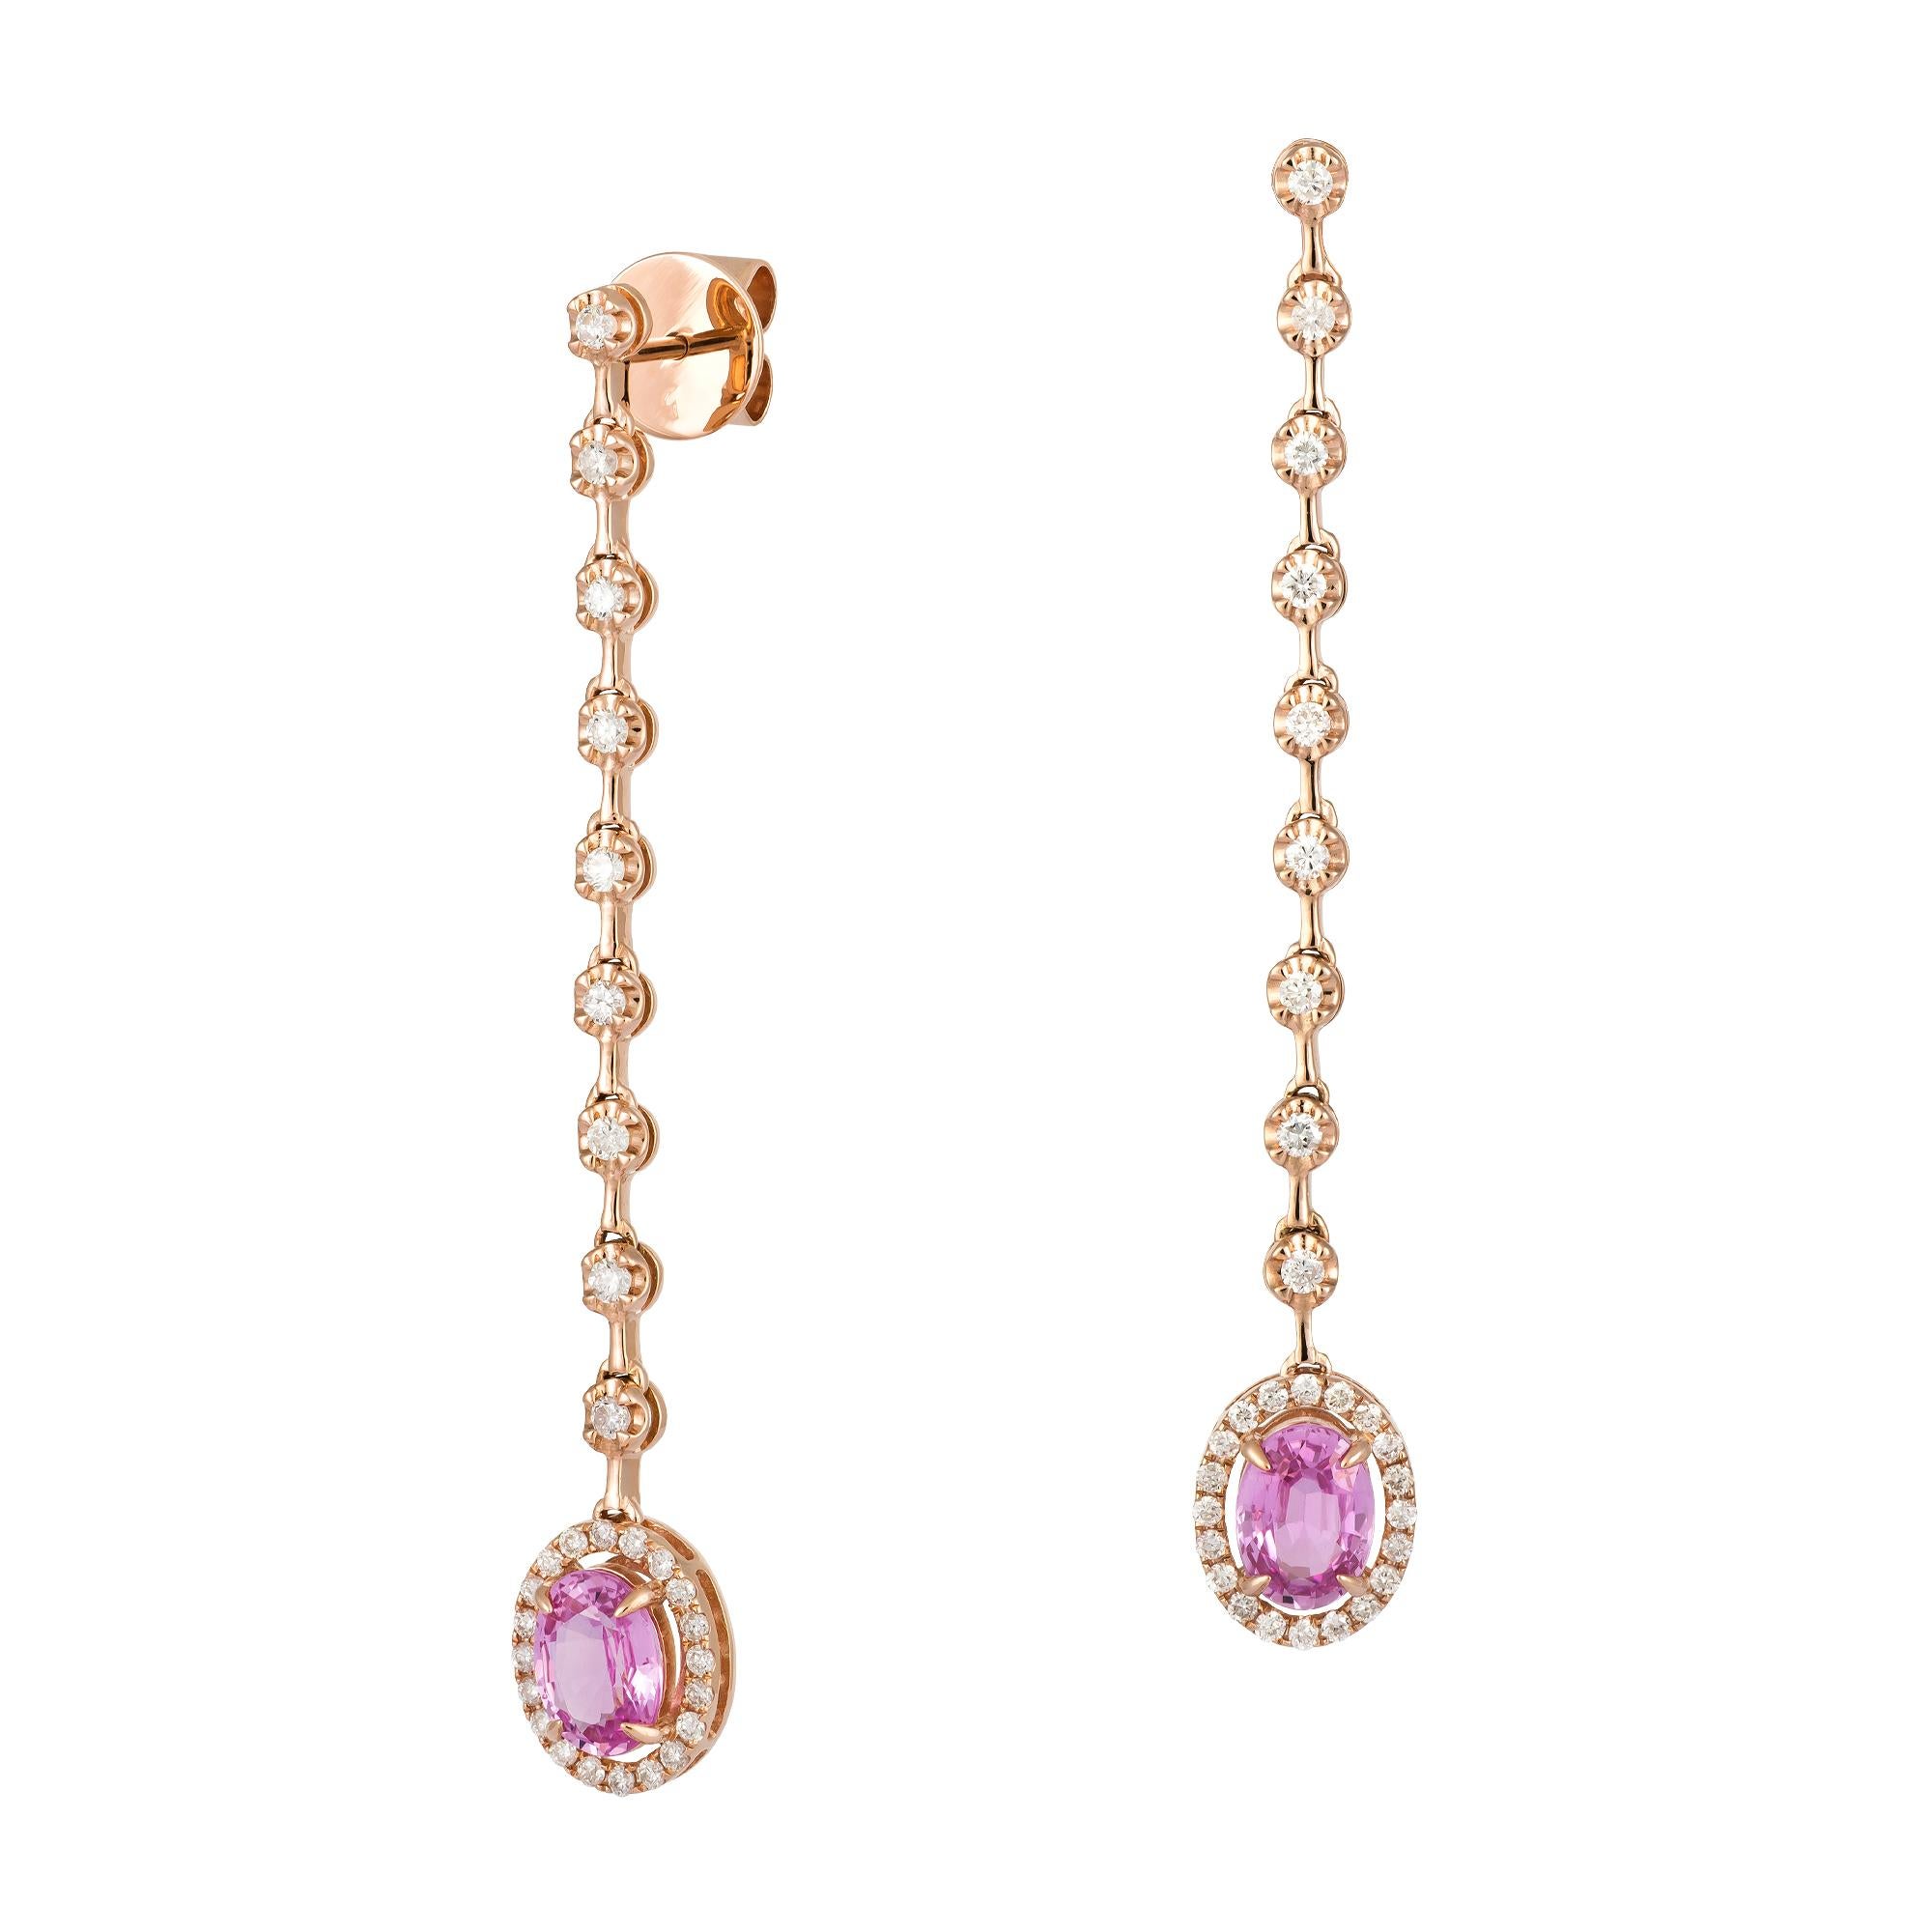 EARRING 18K Pink Gold Diamond 0.57 Cts/59 Pcs Pink Sapphire 1.81 Cts/2 Pcs